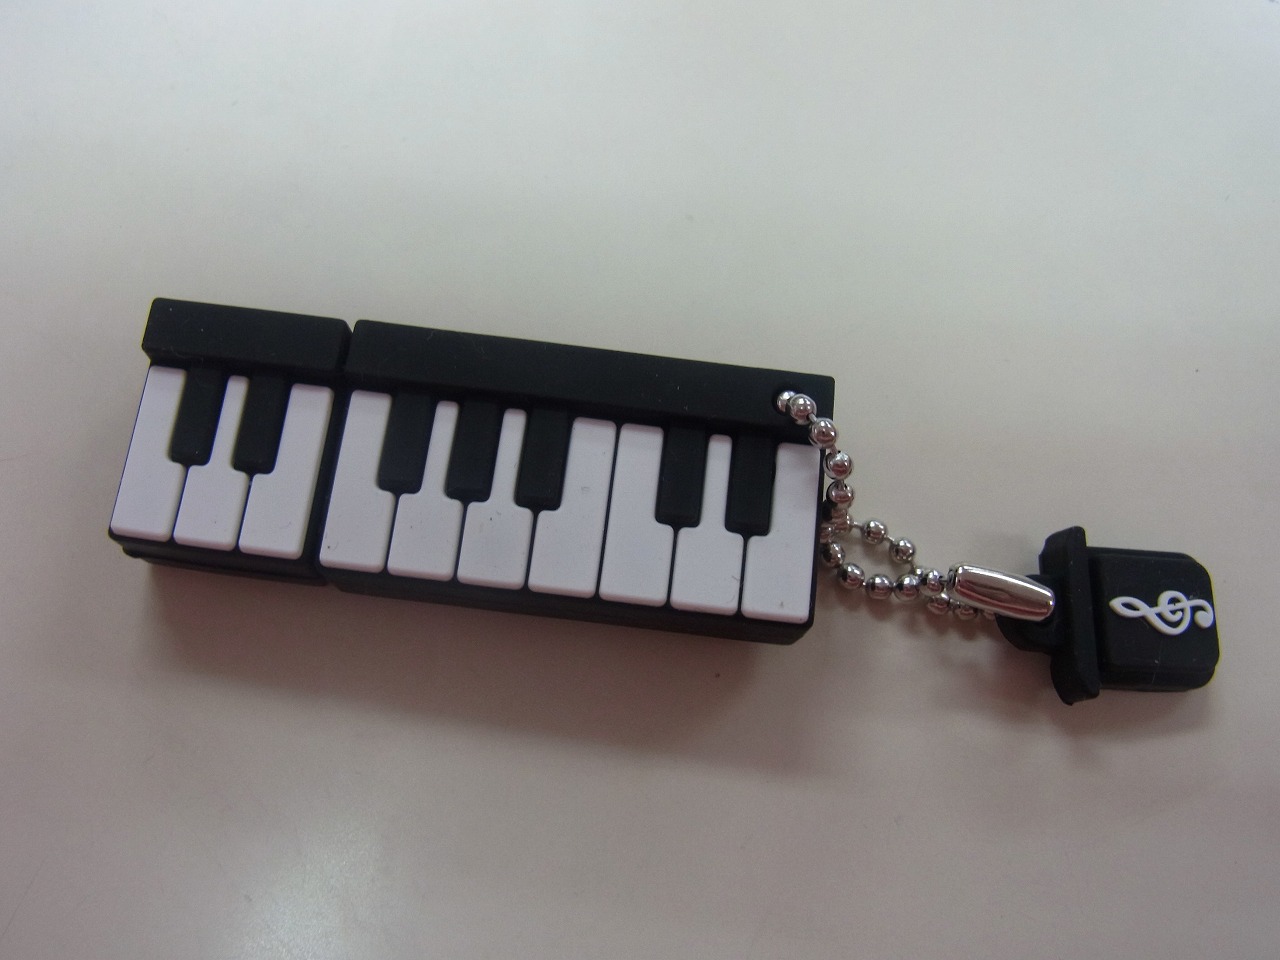 USBメモリ♪ピアノ鍵盤 2GB♪【プレゼントに最適♪】 音楽雑貨 音楽グッズ  <br>音楽発表会 記念品 プレゼントに最適 ♪